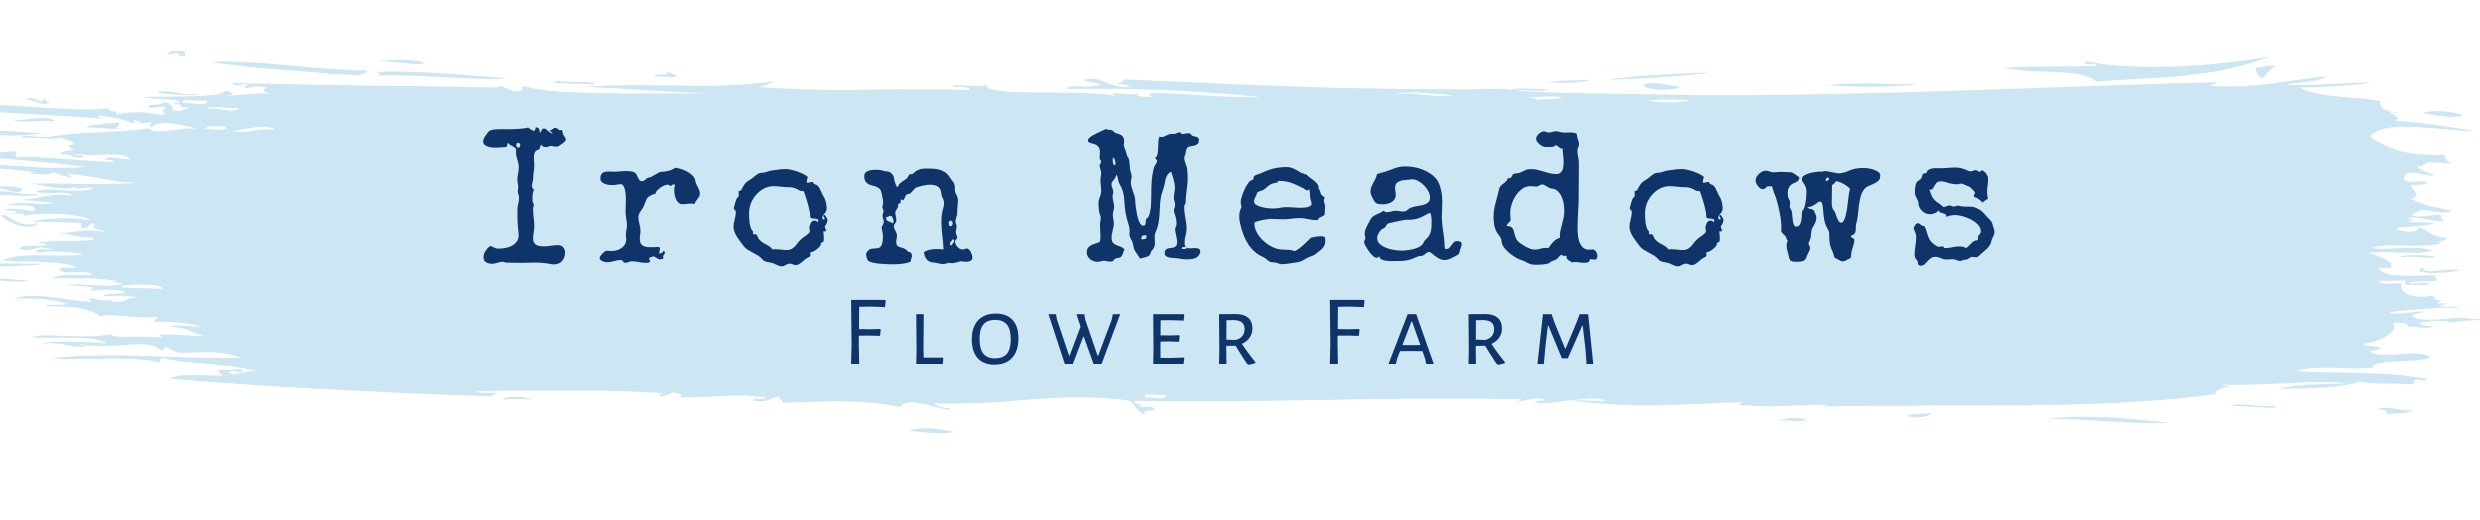 Iron Meadows Flower Farm Logo